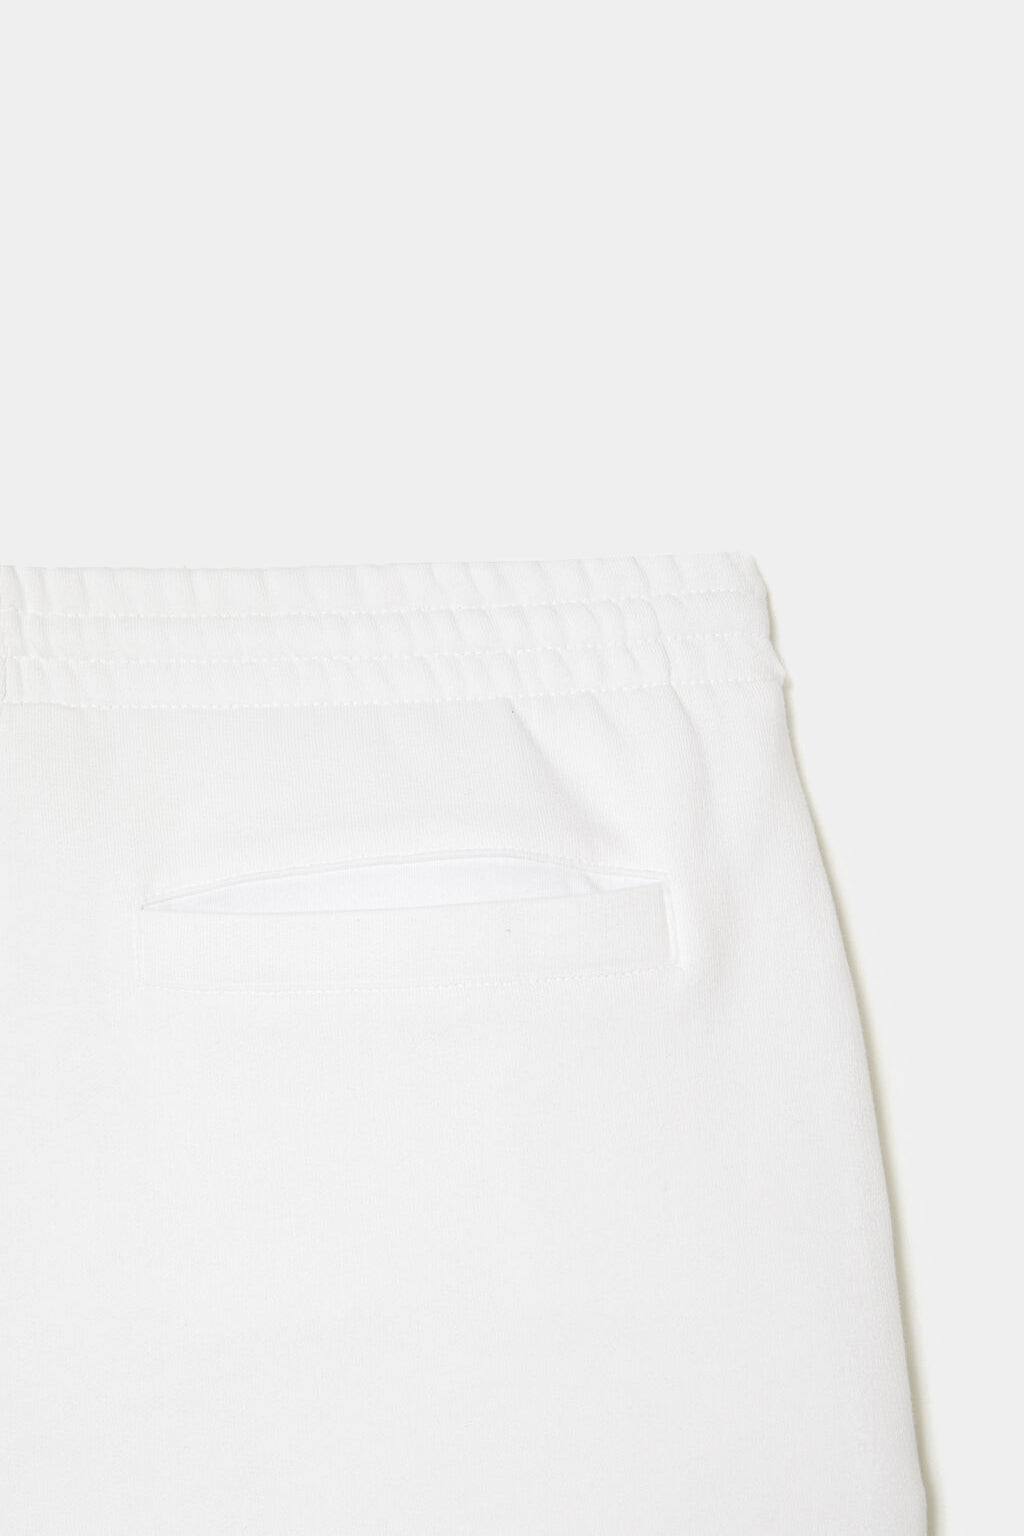 Lacoste - Men's Lacoste Organic Brushed Cotton Fleece Shorts